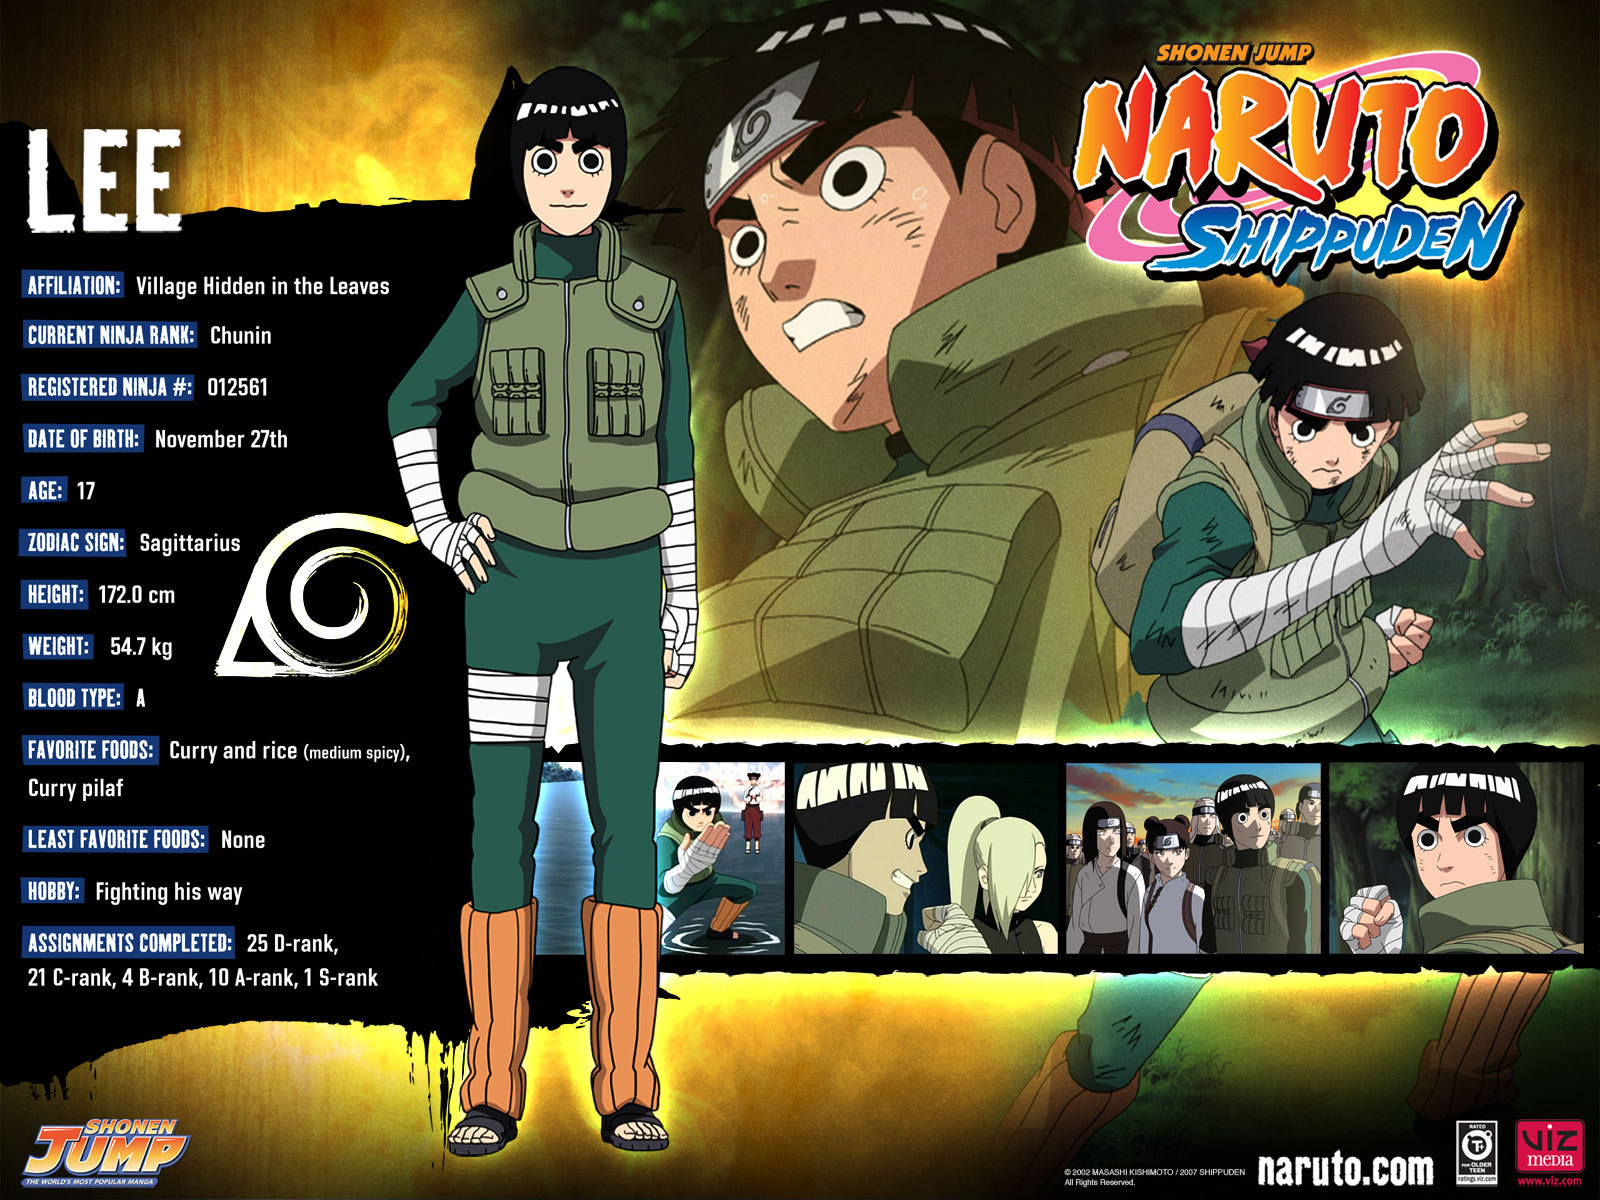 Gambar Para Pemain Naruto Shippuden 2020 » DUNIA REMAJA 2020